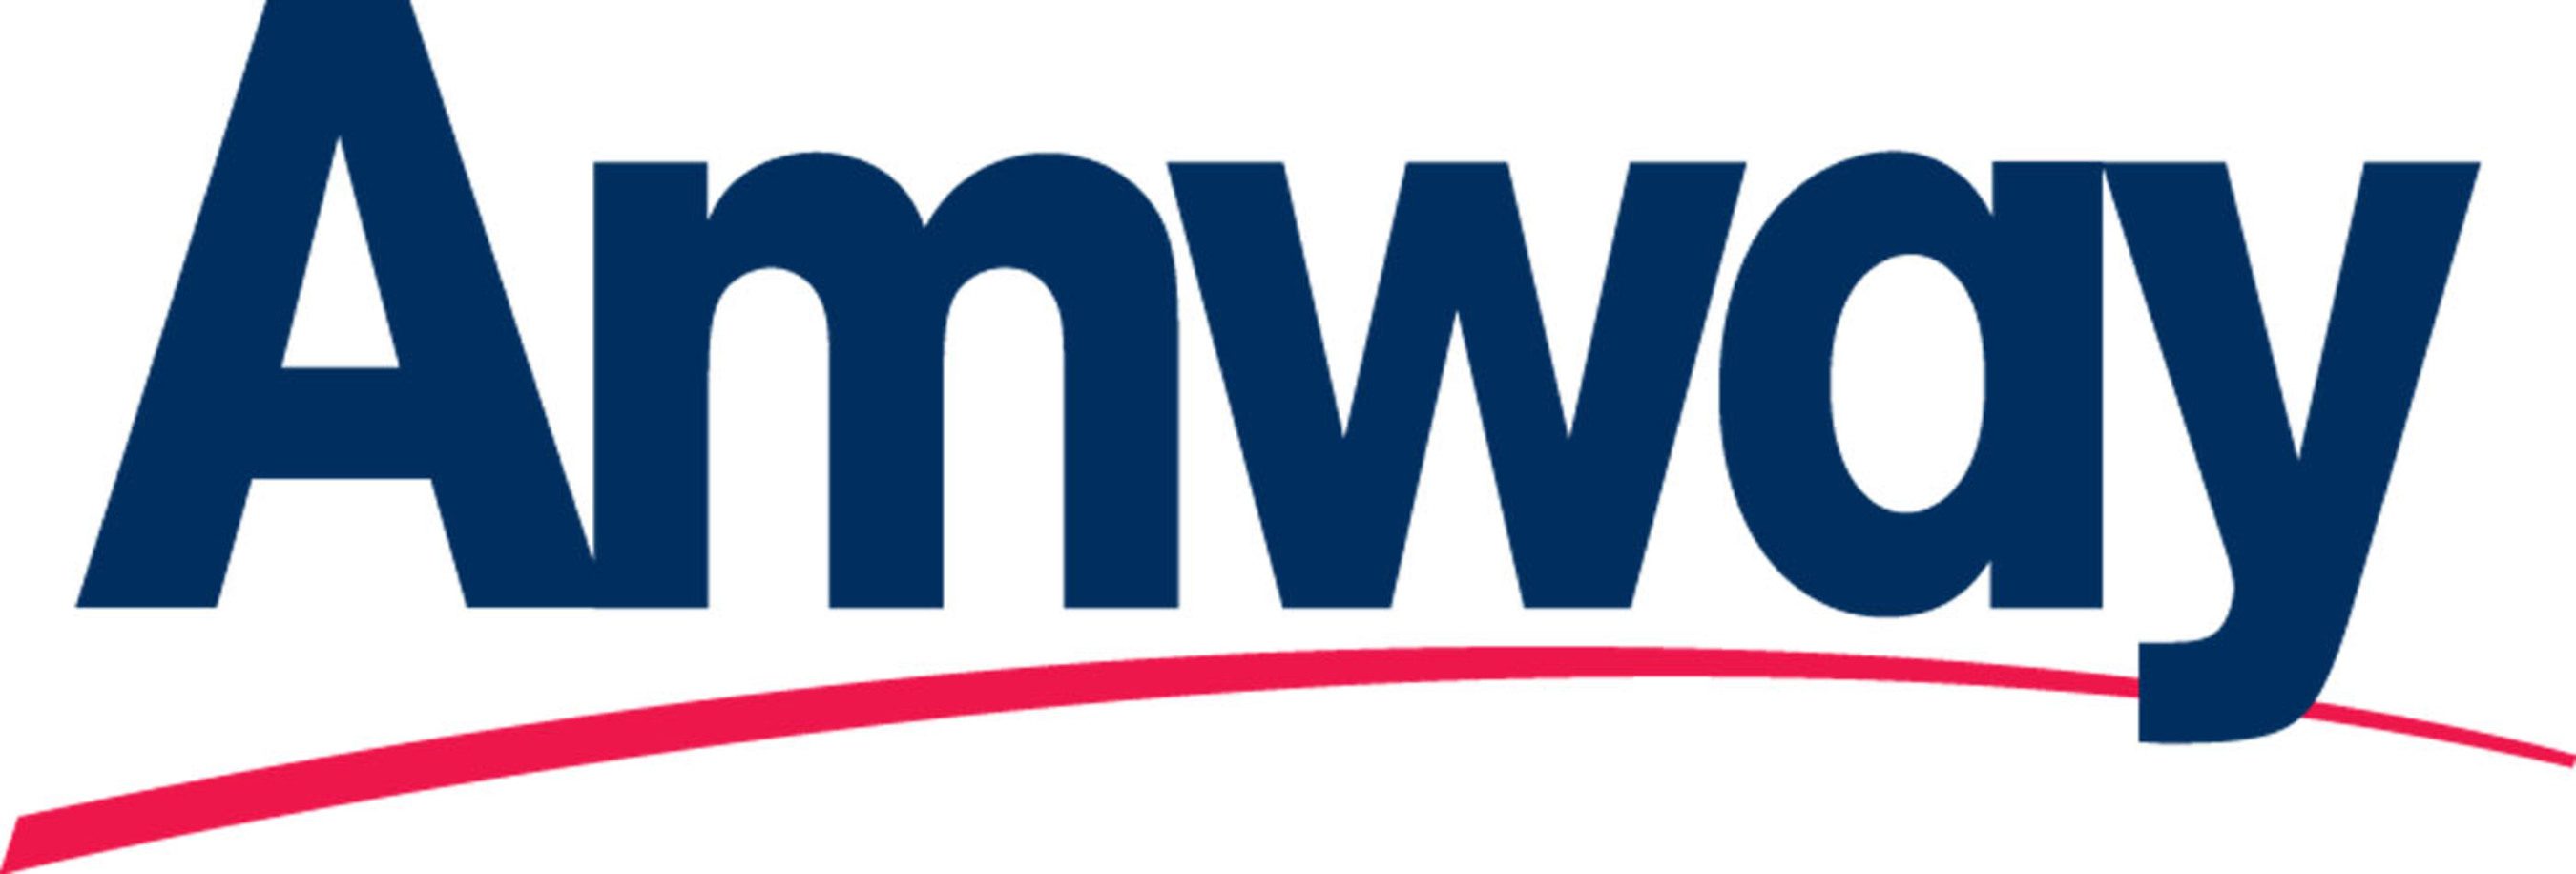 Amway logo. (PRNewsFoto/Amway) (PRNewsFoto/)